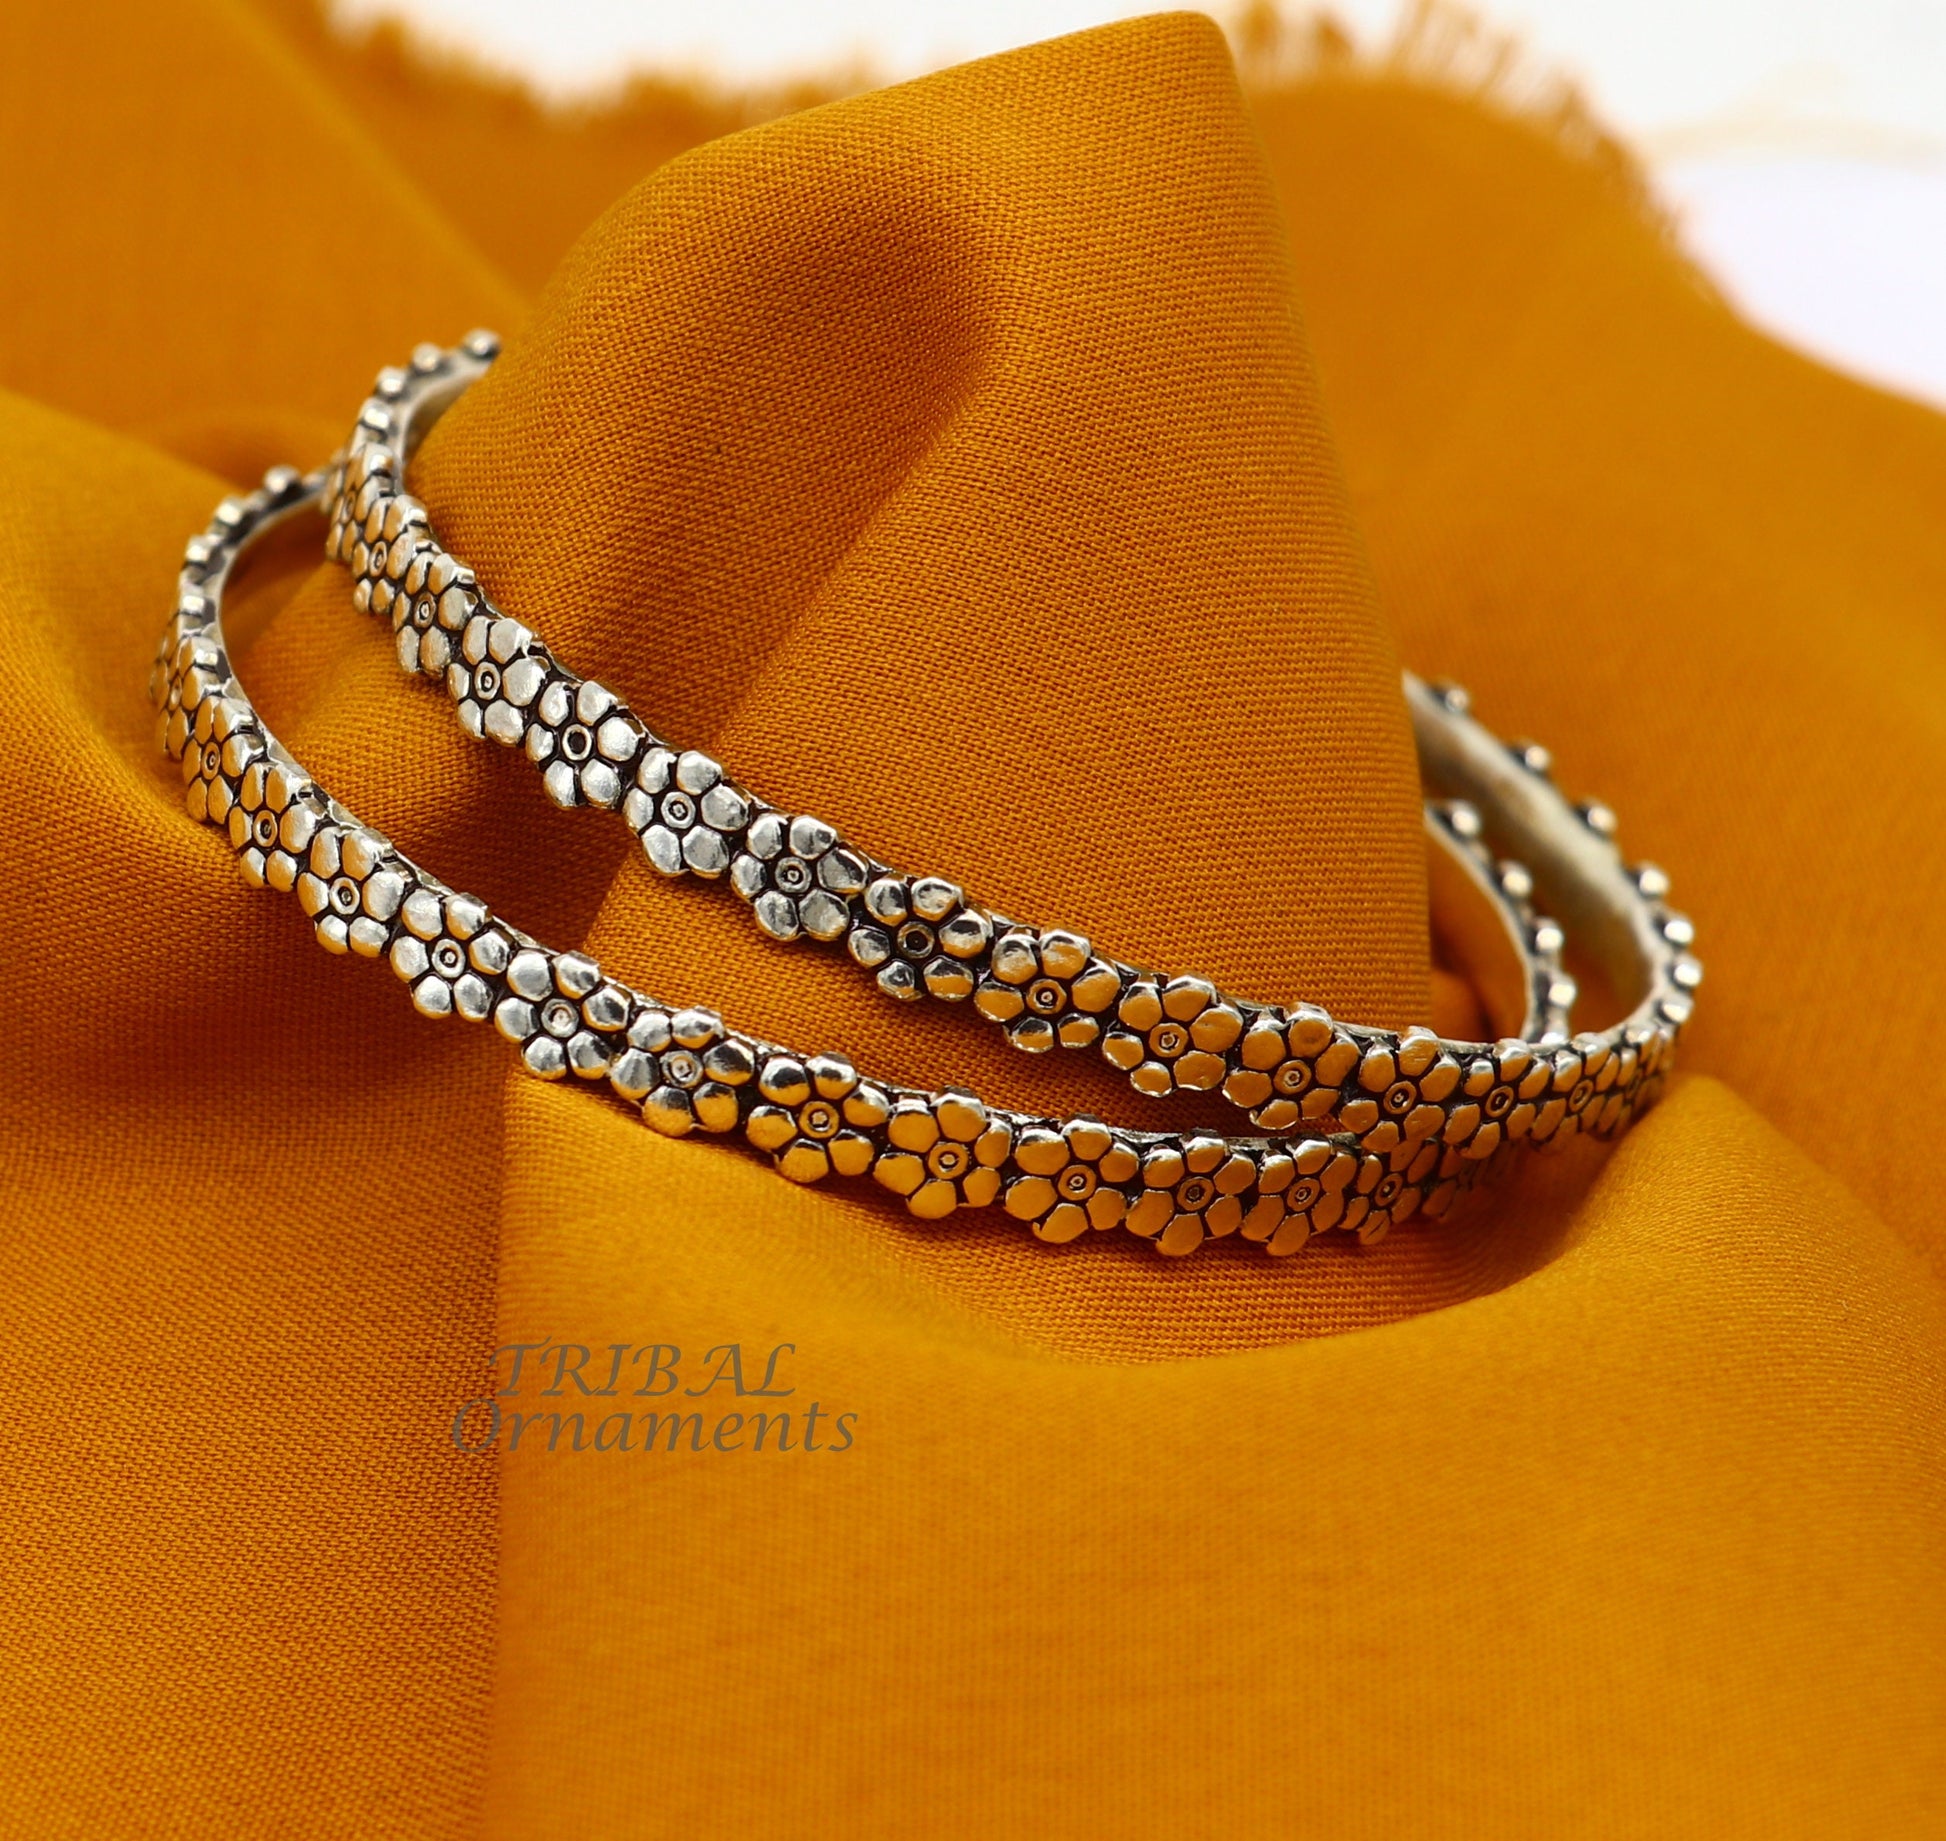 Vintage design floral style 925 sterling silver bangles bracelet, fancy stylish gorgeous kangan tribal belly dance jewelry nba345 - TRIBAL ORNAMENTS